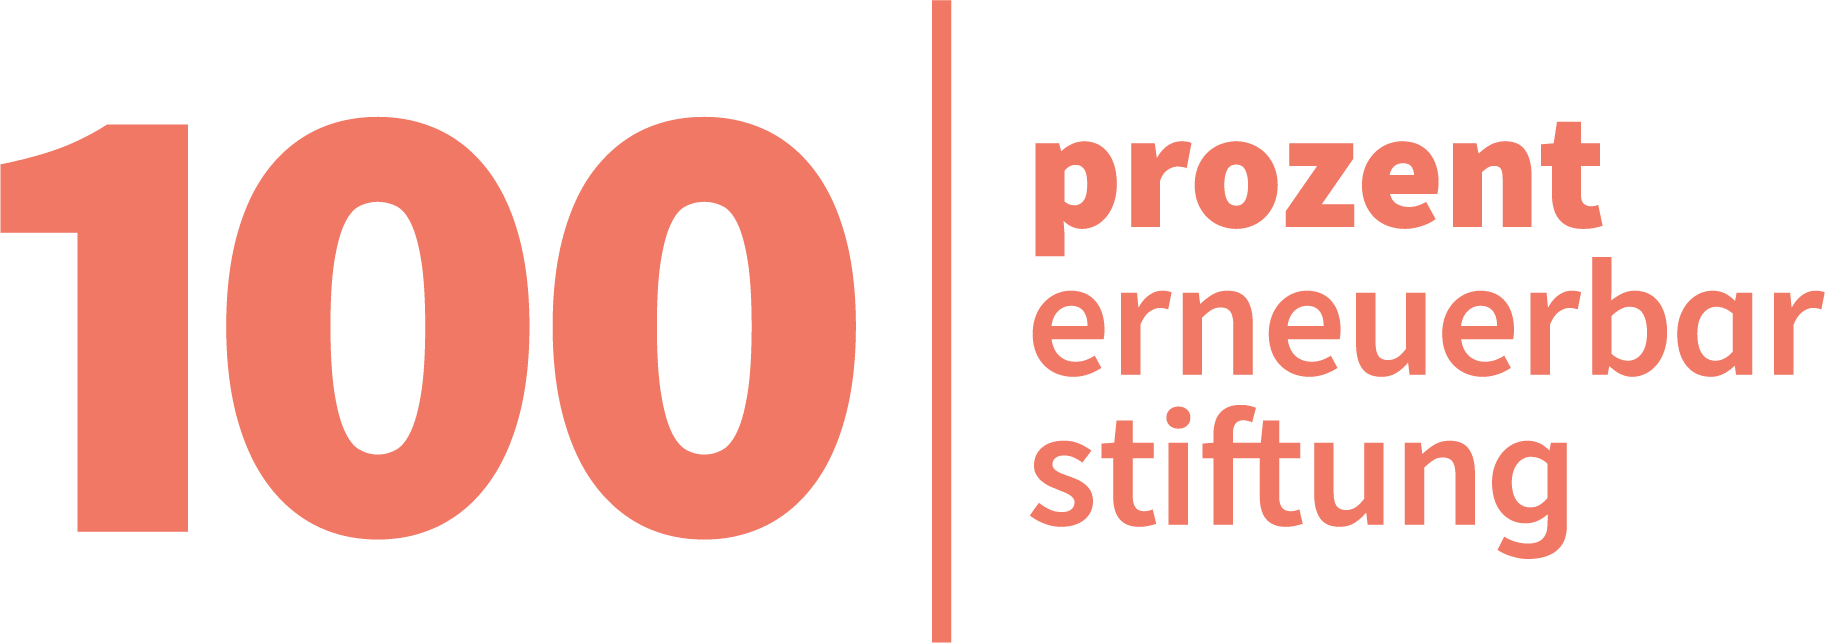 100 prozent erneuerbar stiftung logo